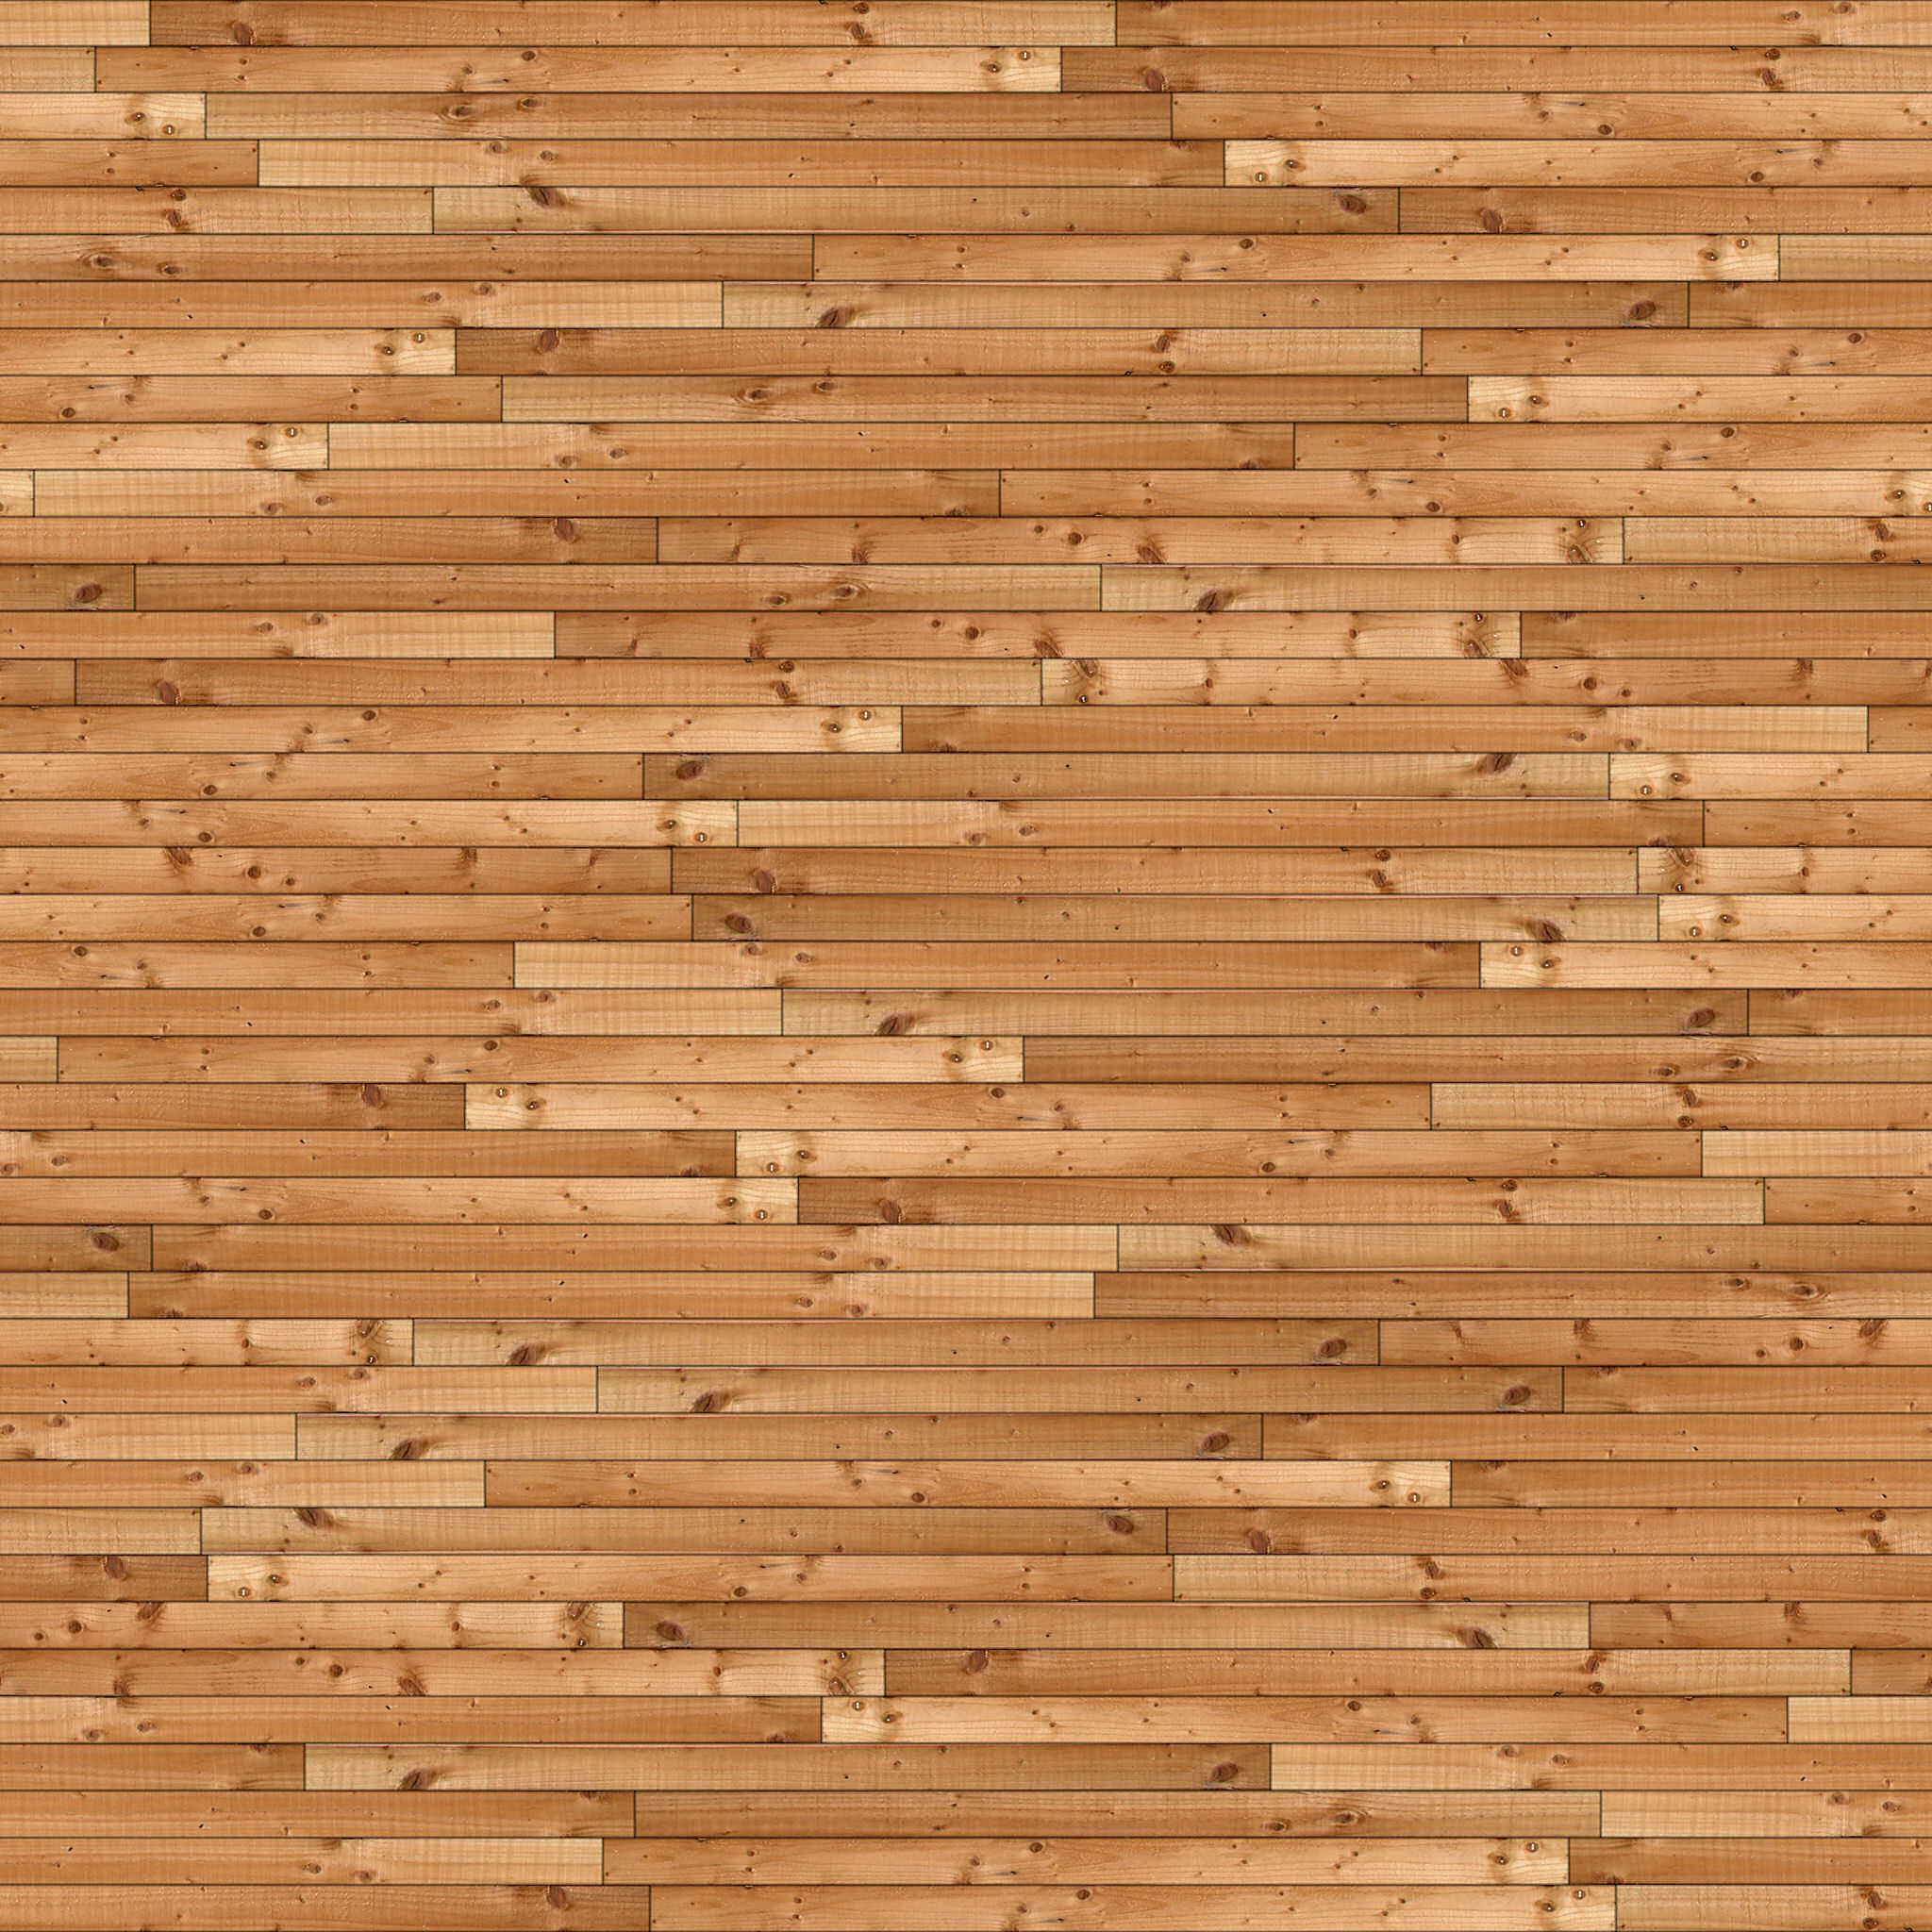 Free download: Brick and Wood textures | Bricks'n'Tiles